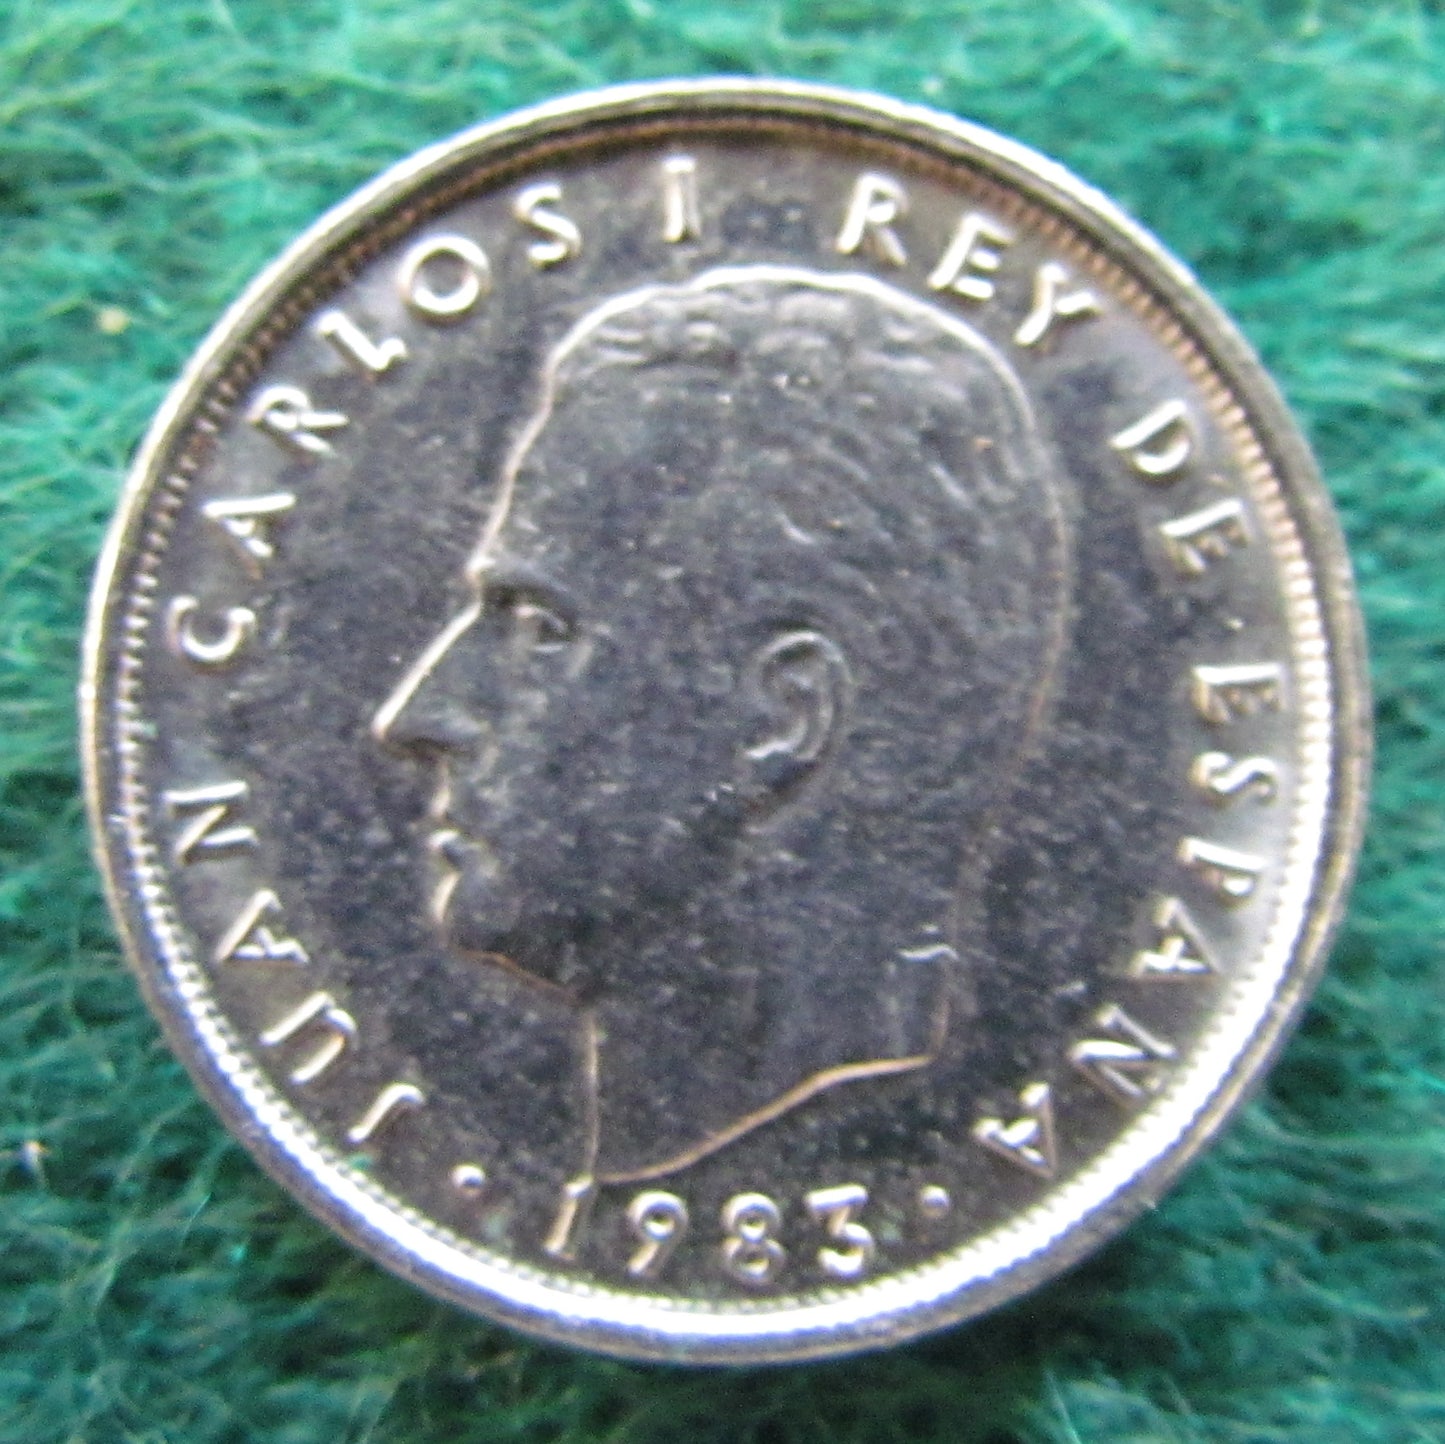 Spanish 1983 10 Diez Pesetas Coin - Circulated